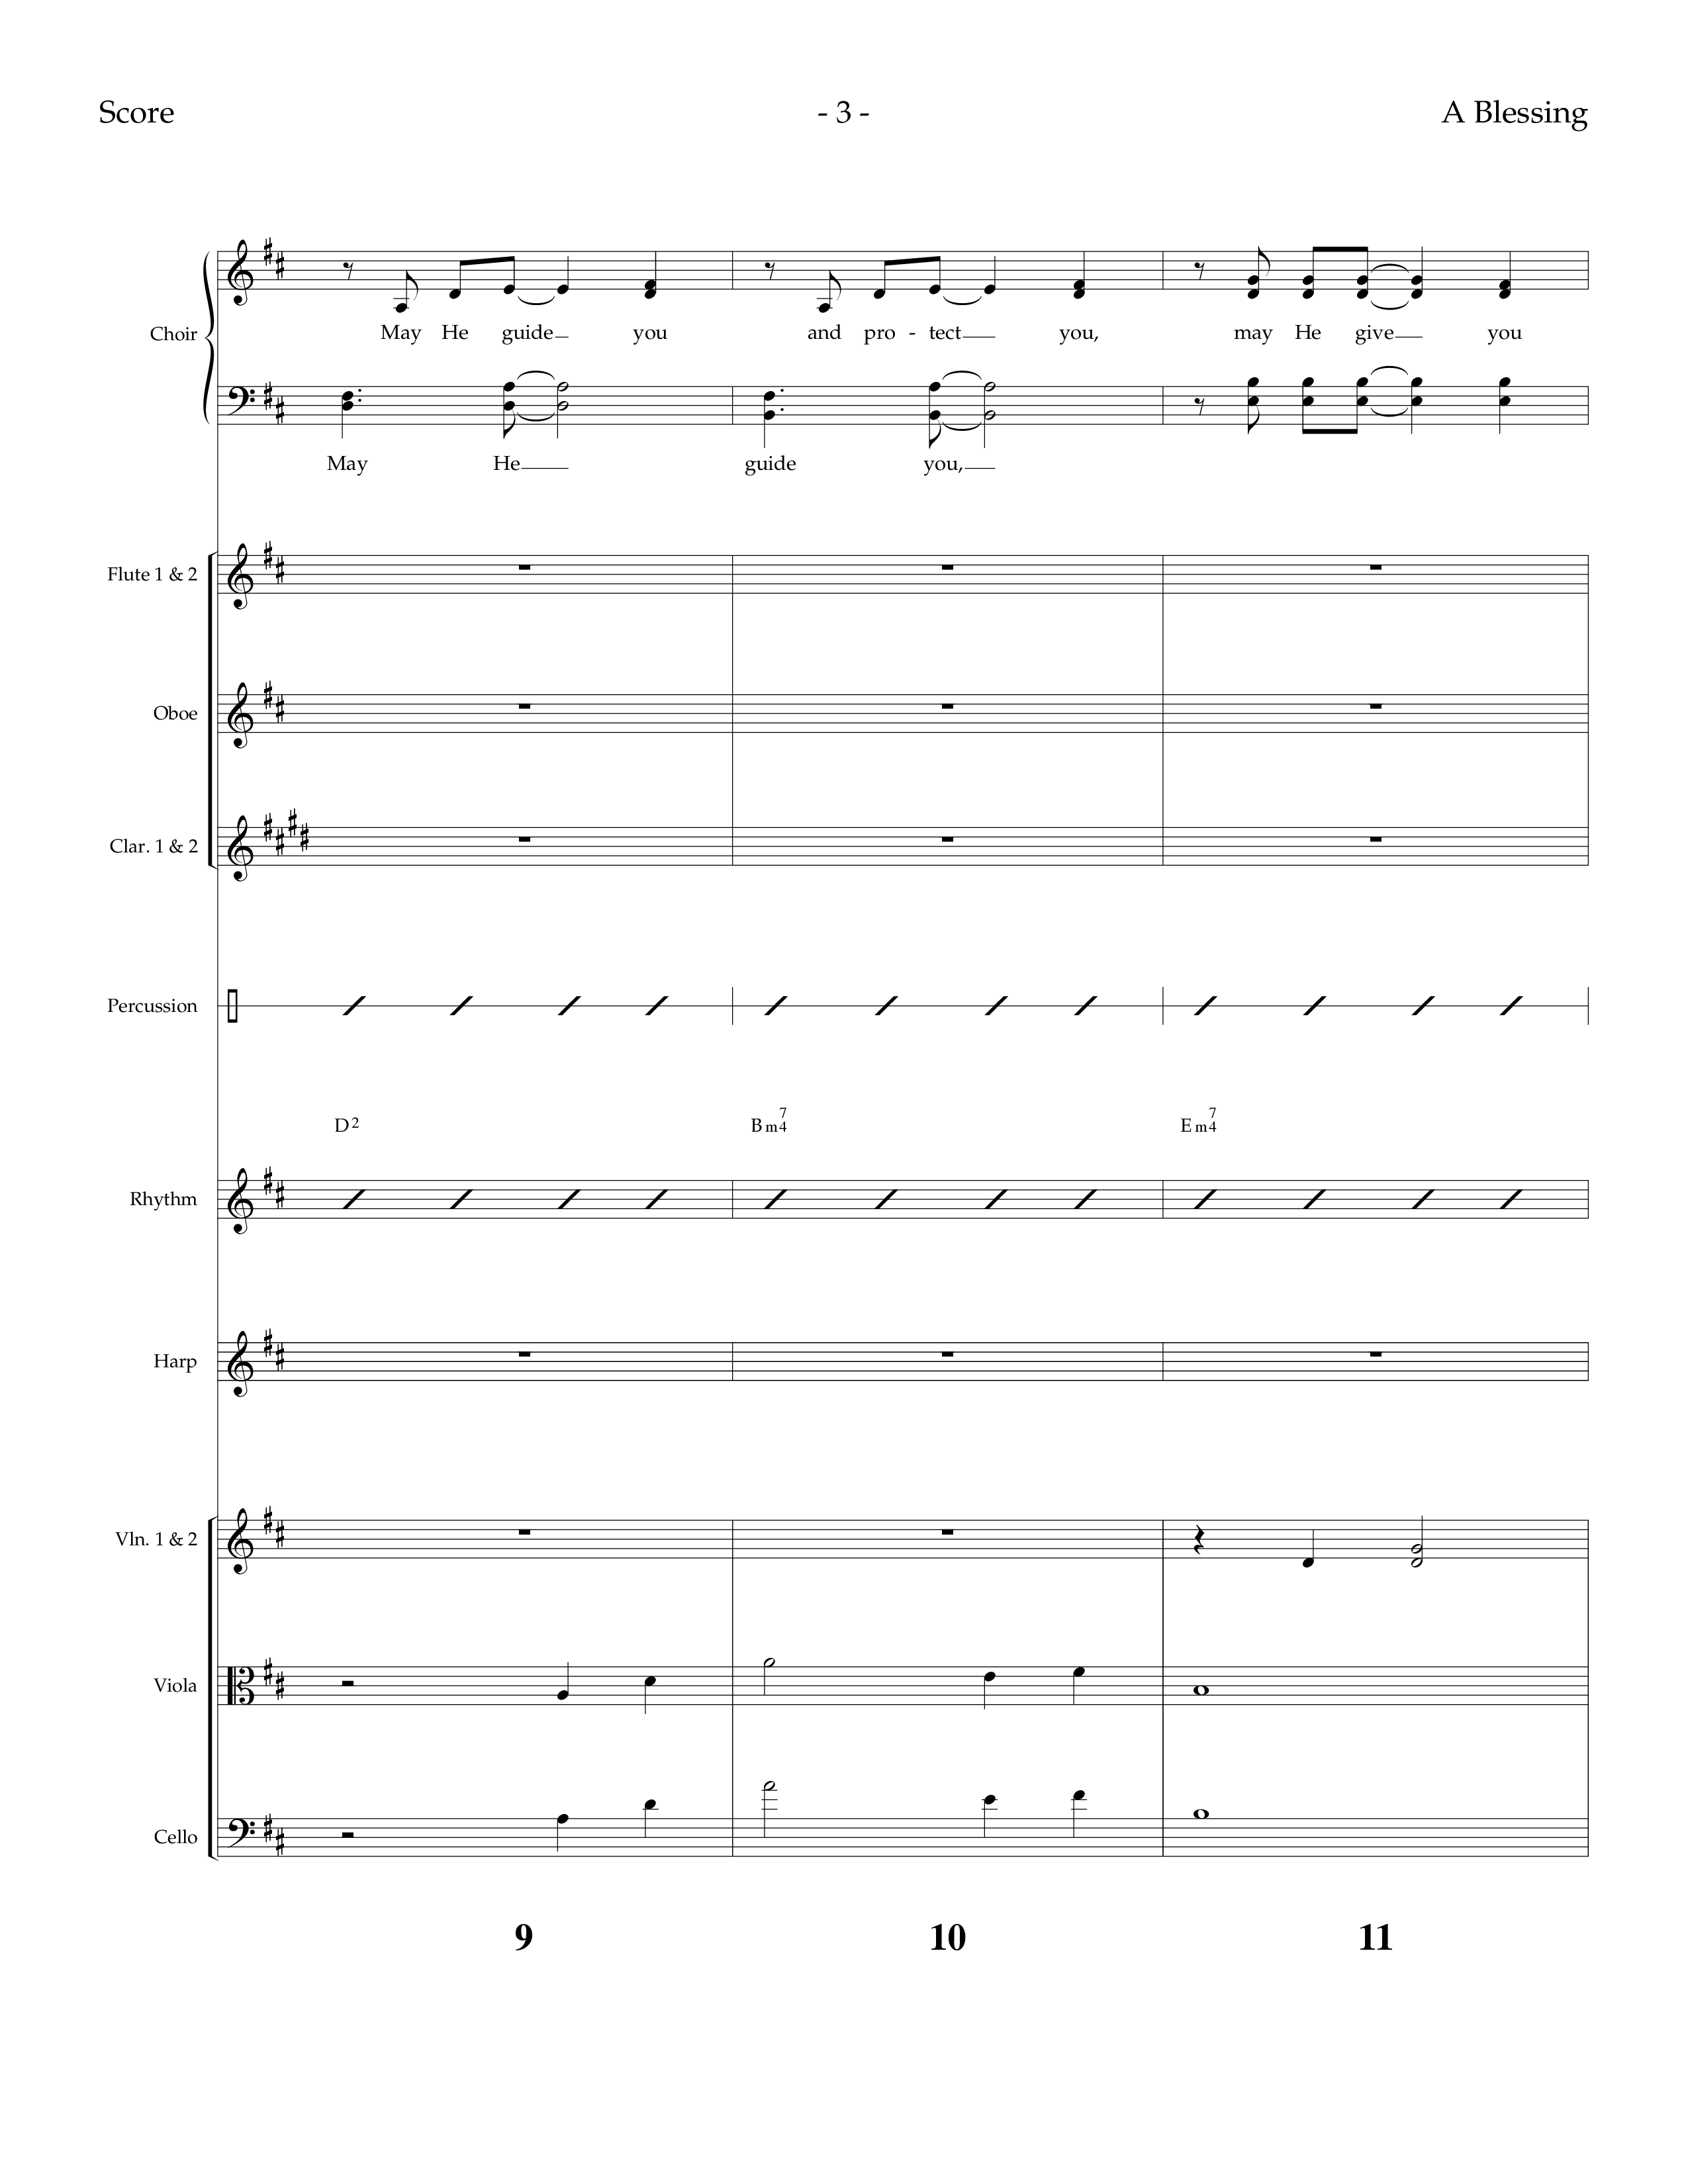 A Blessing (Choral Anthem SATB) Conductor's Score (Lifeway Choral / Arr. Dennis Allen)